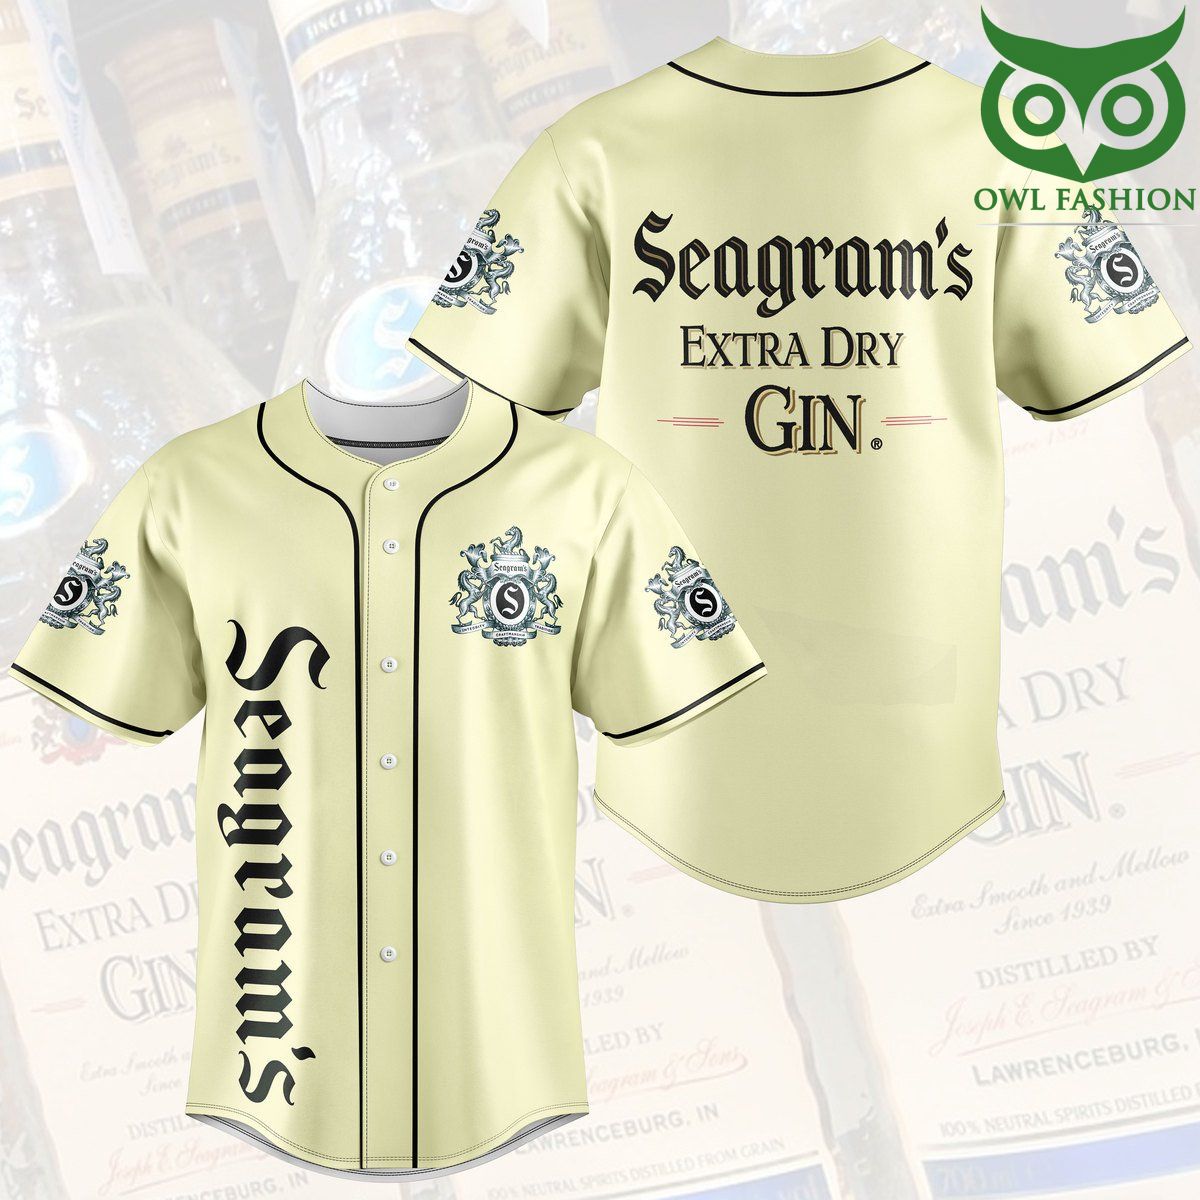 19 Seagrams Extra Dry Gin Baseball Jersey Shirt